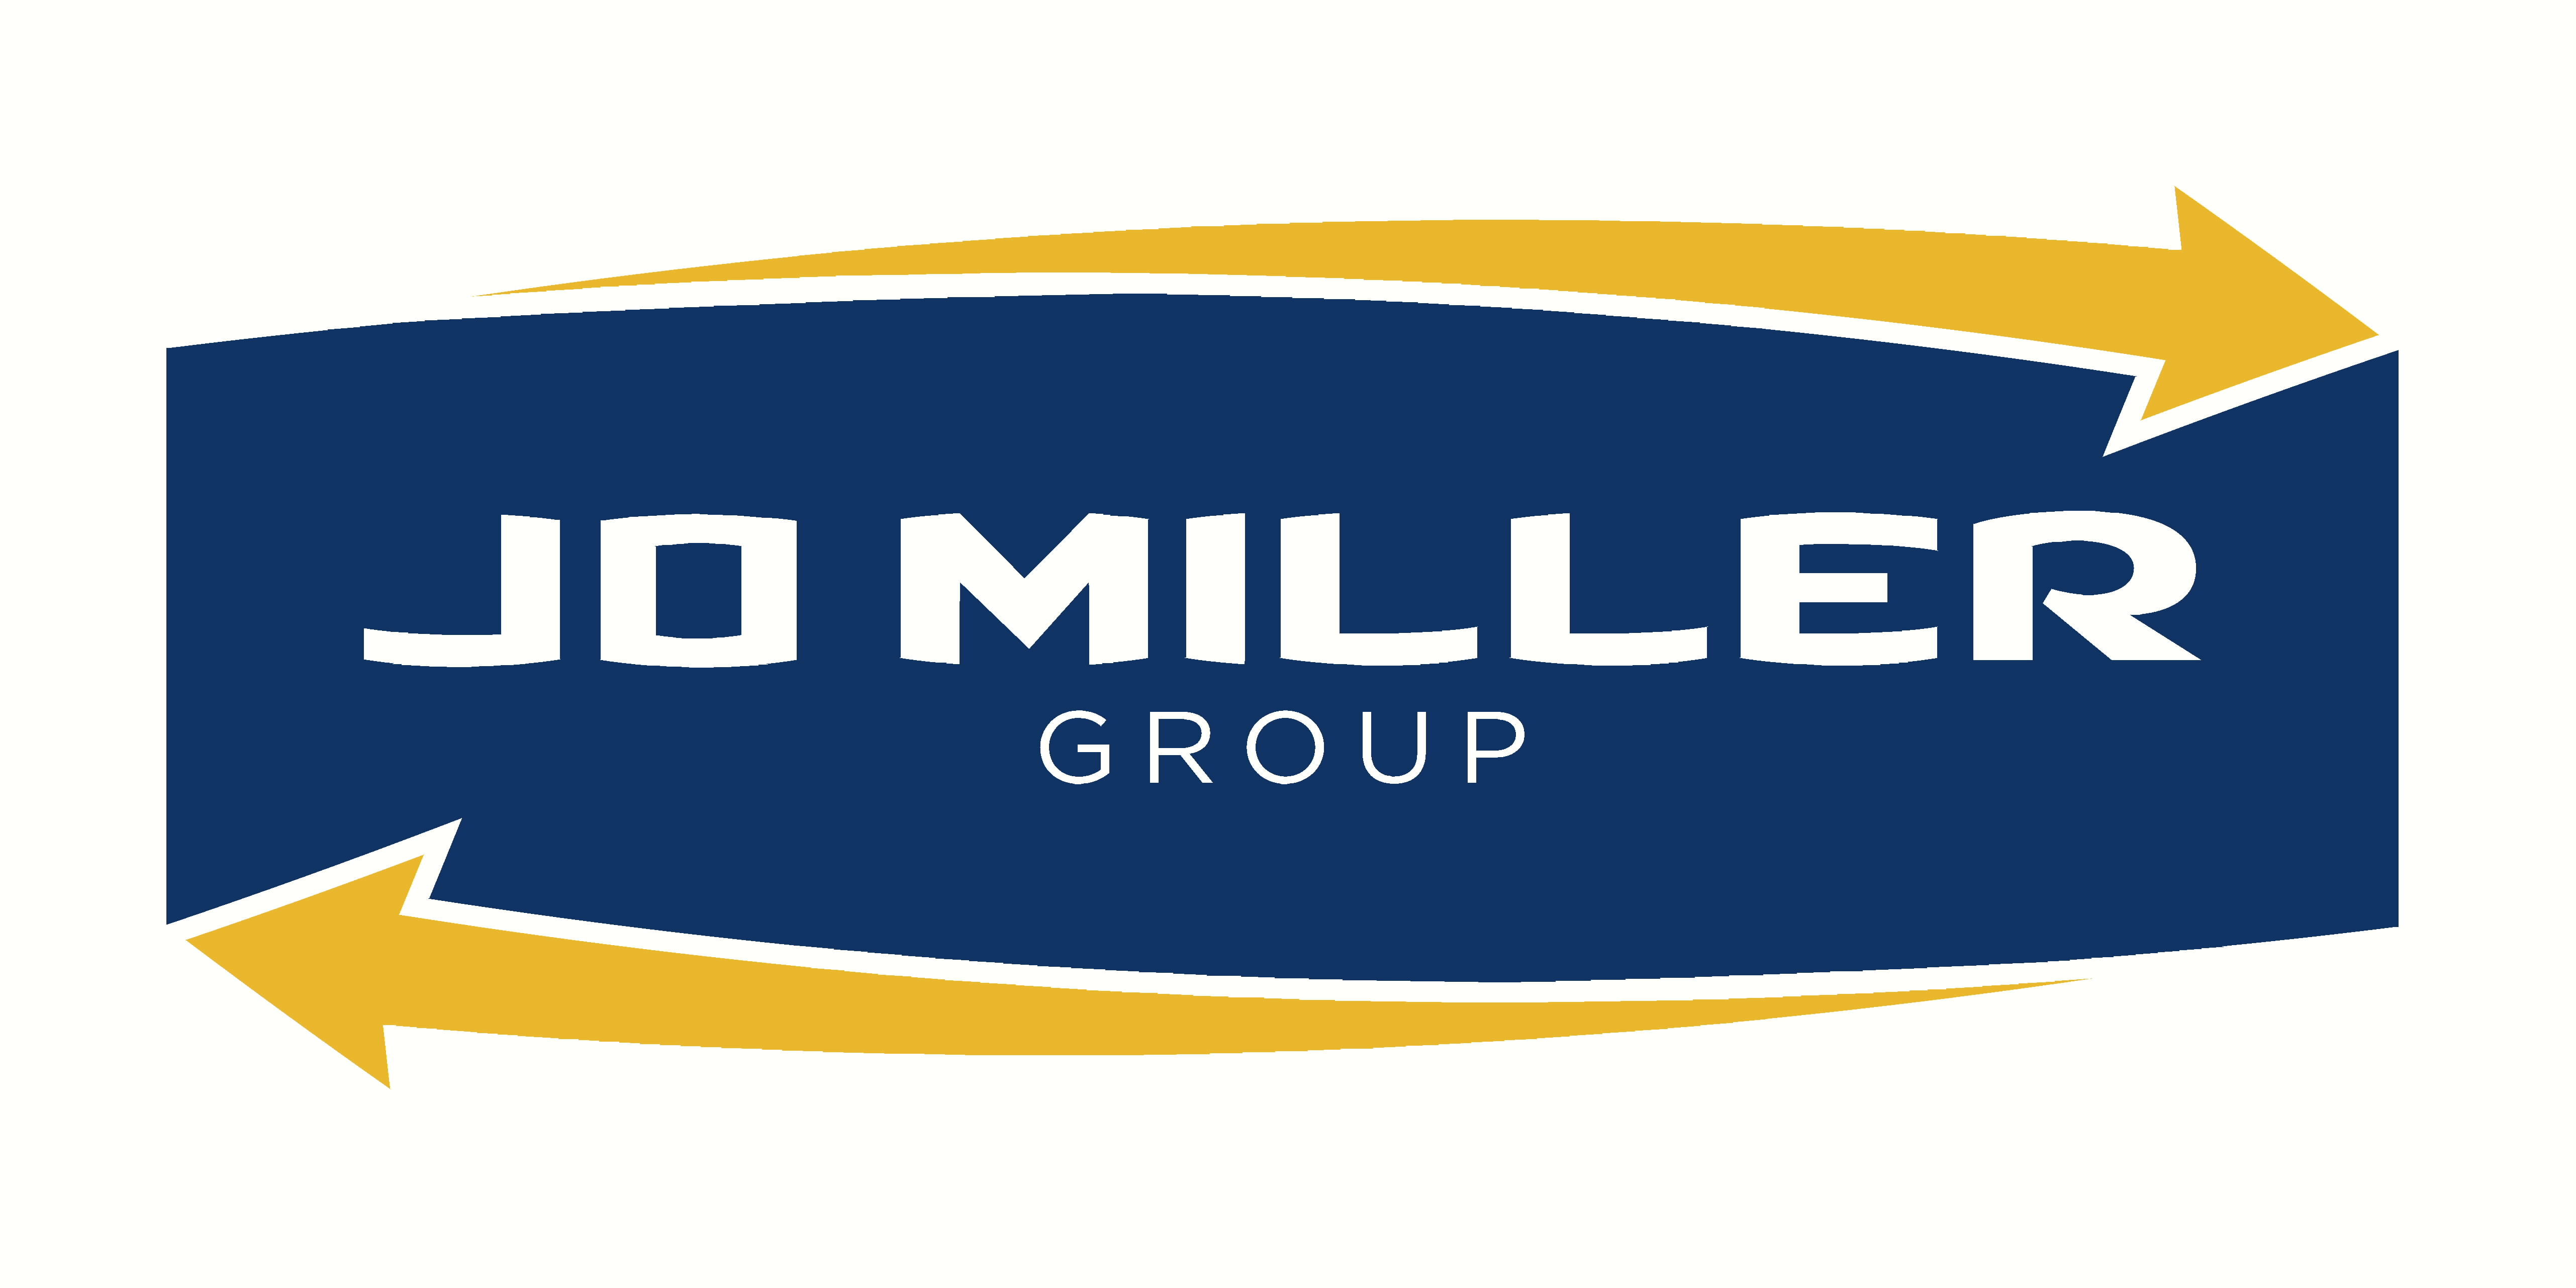 J. O. Miller Group